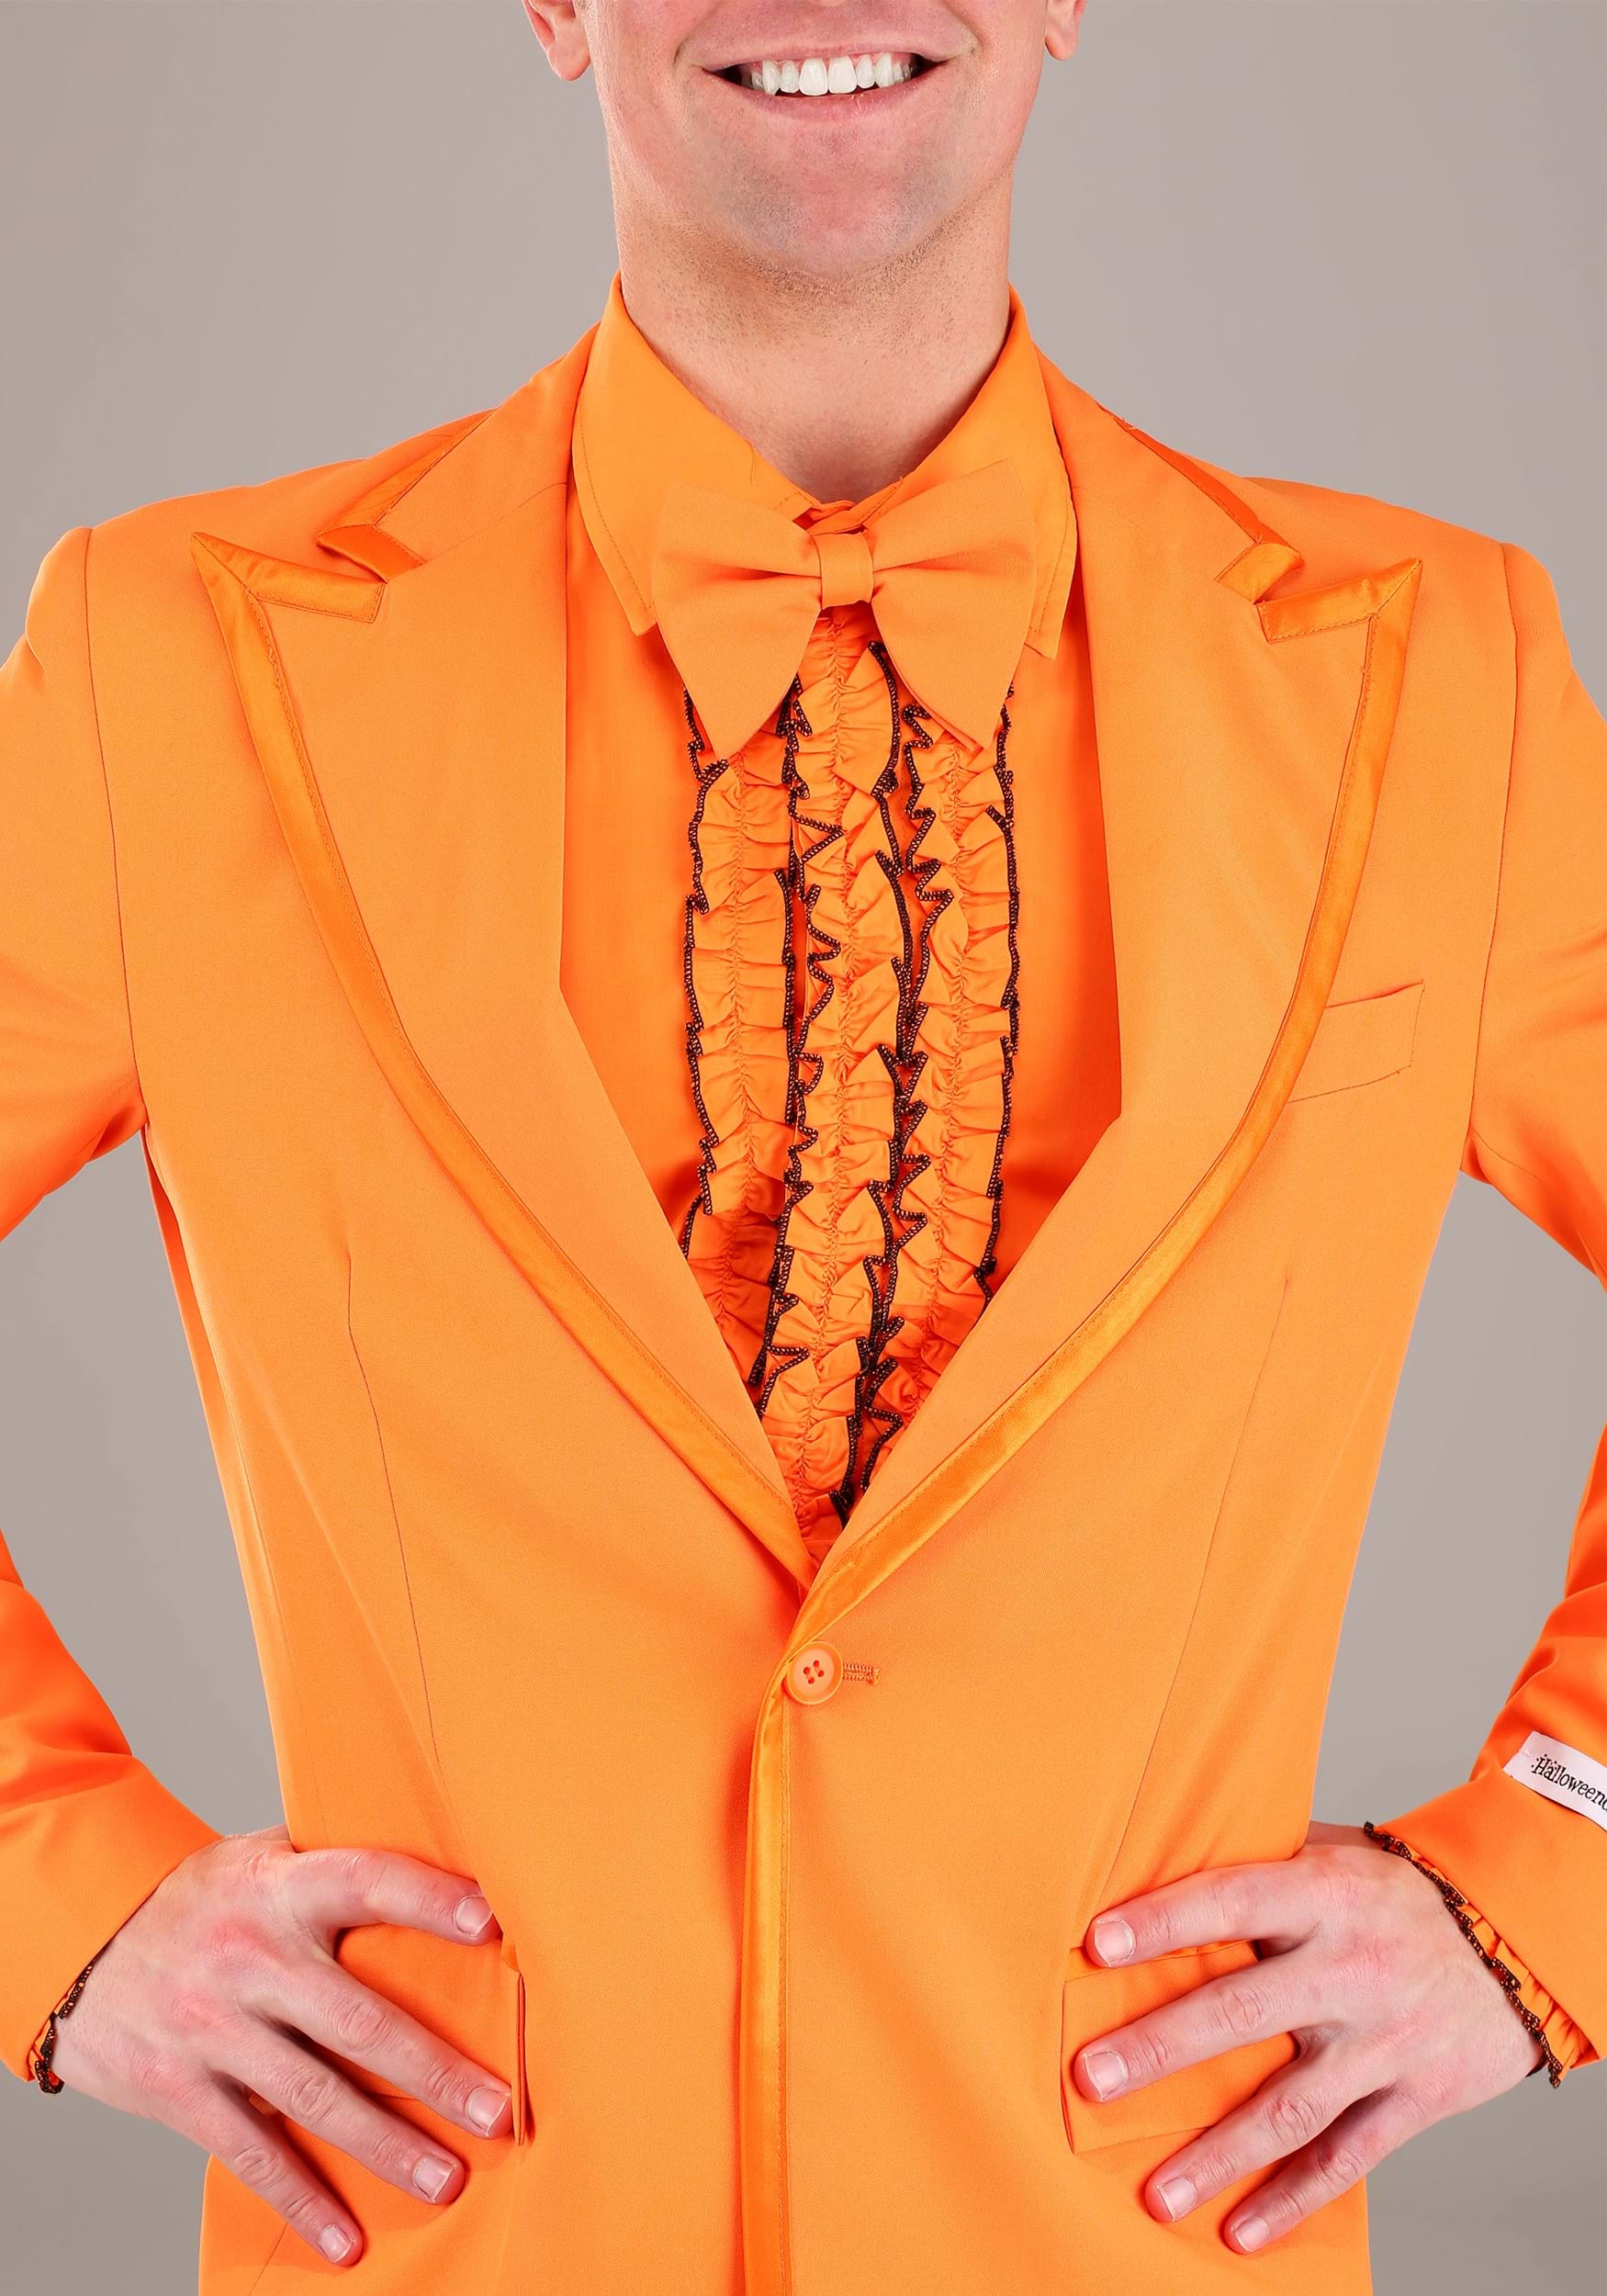 Orange Tuxedo Costume For Men